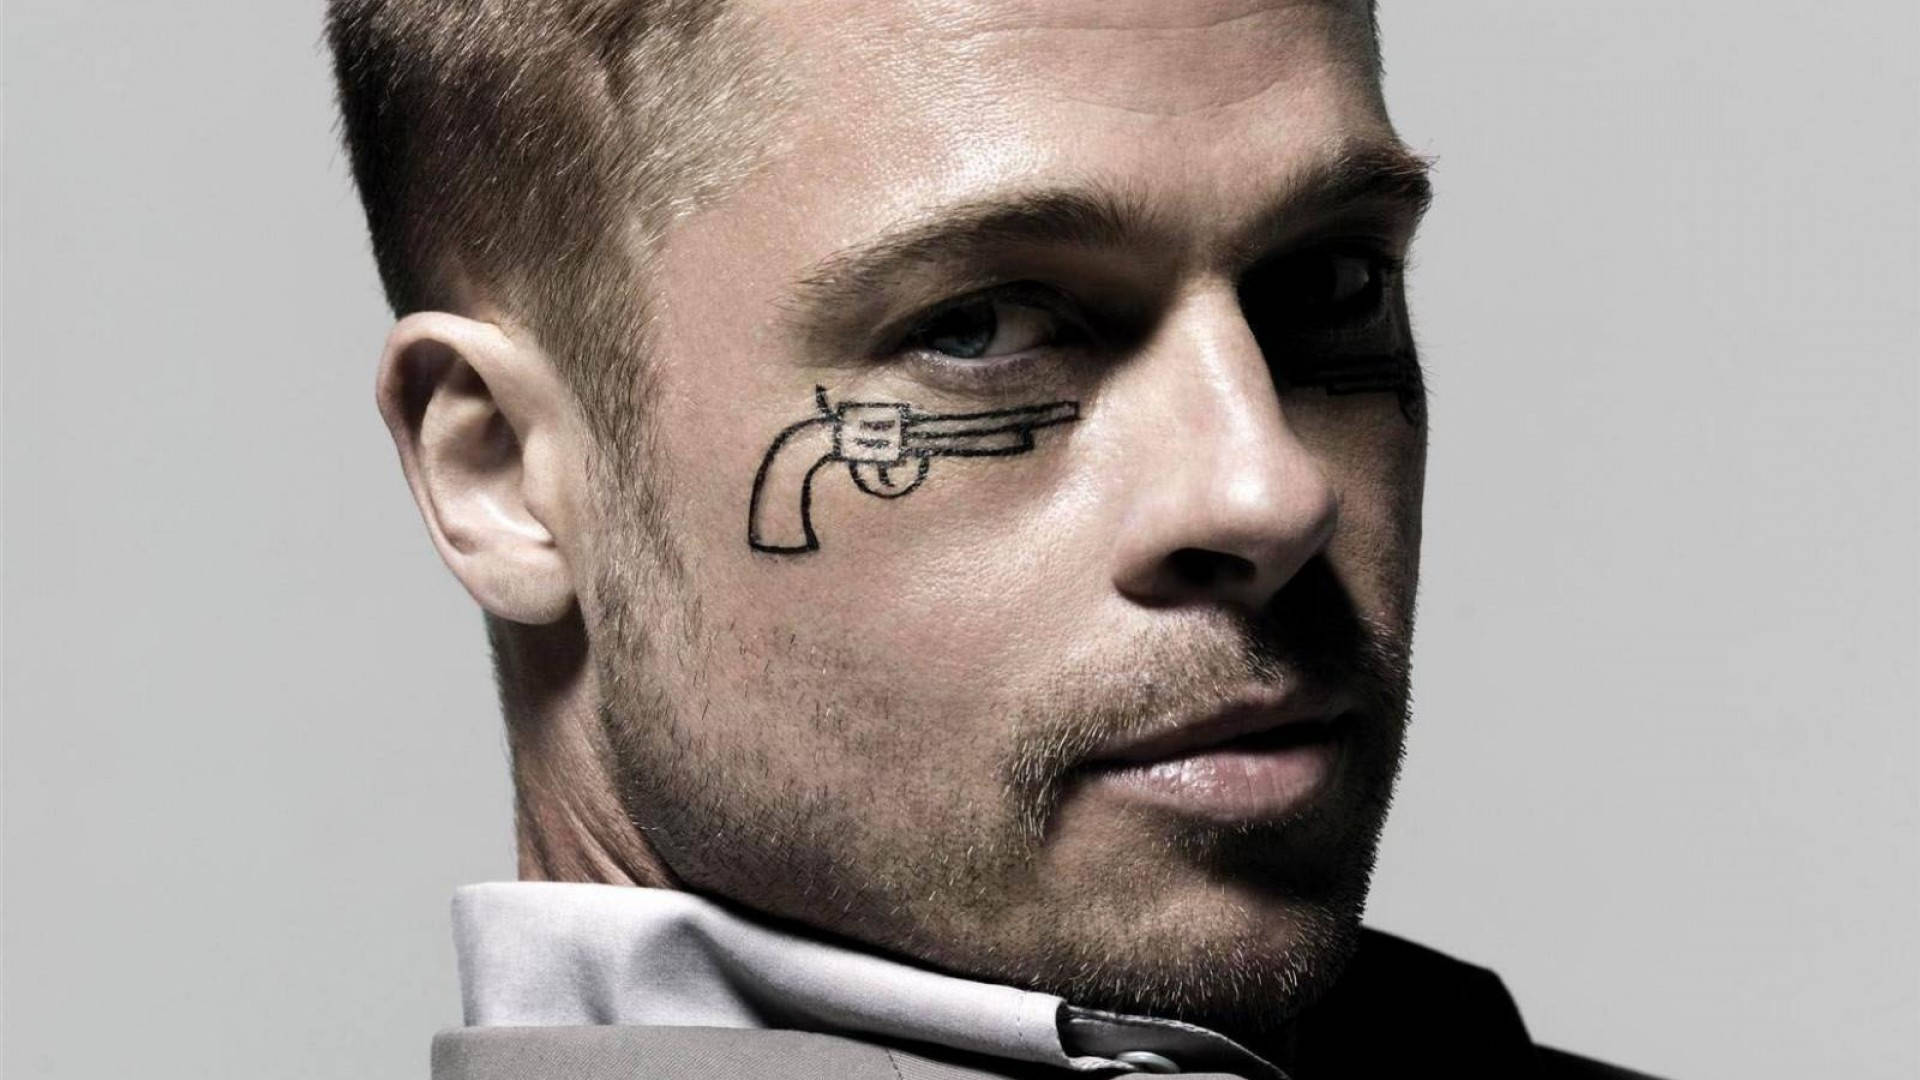 Brad Pitt sporting a gun tattoo in his eye Wallpaper